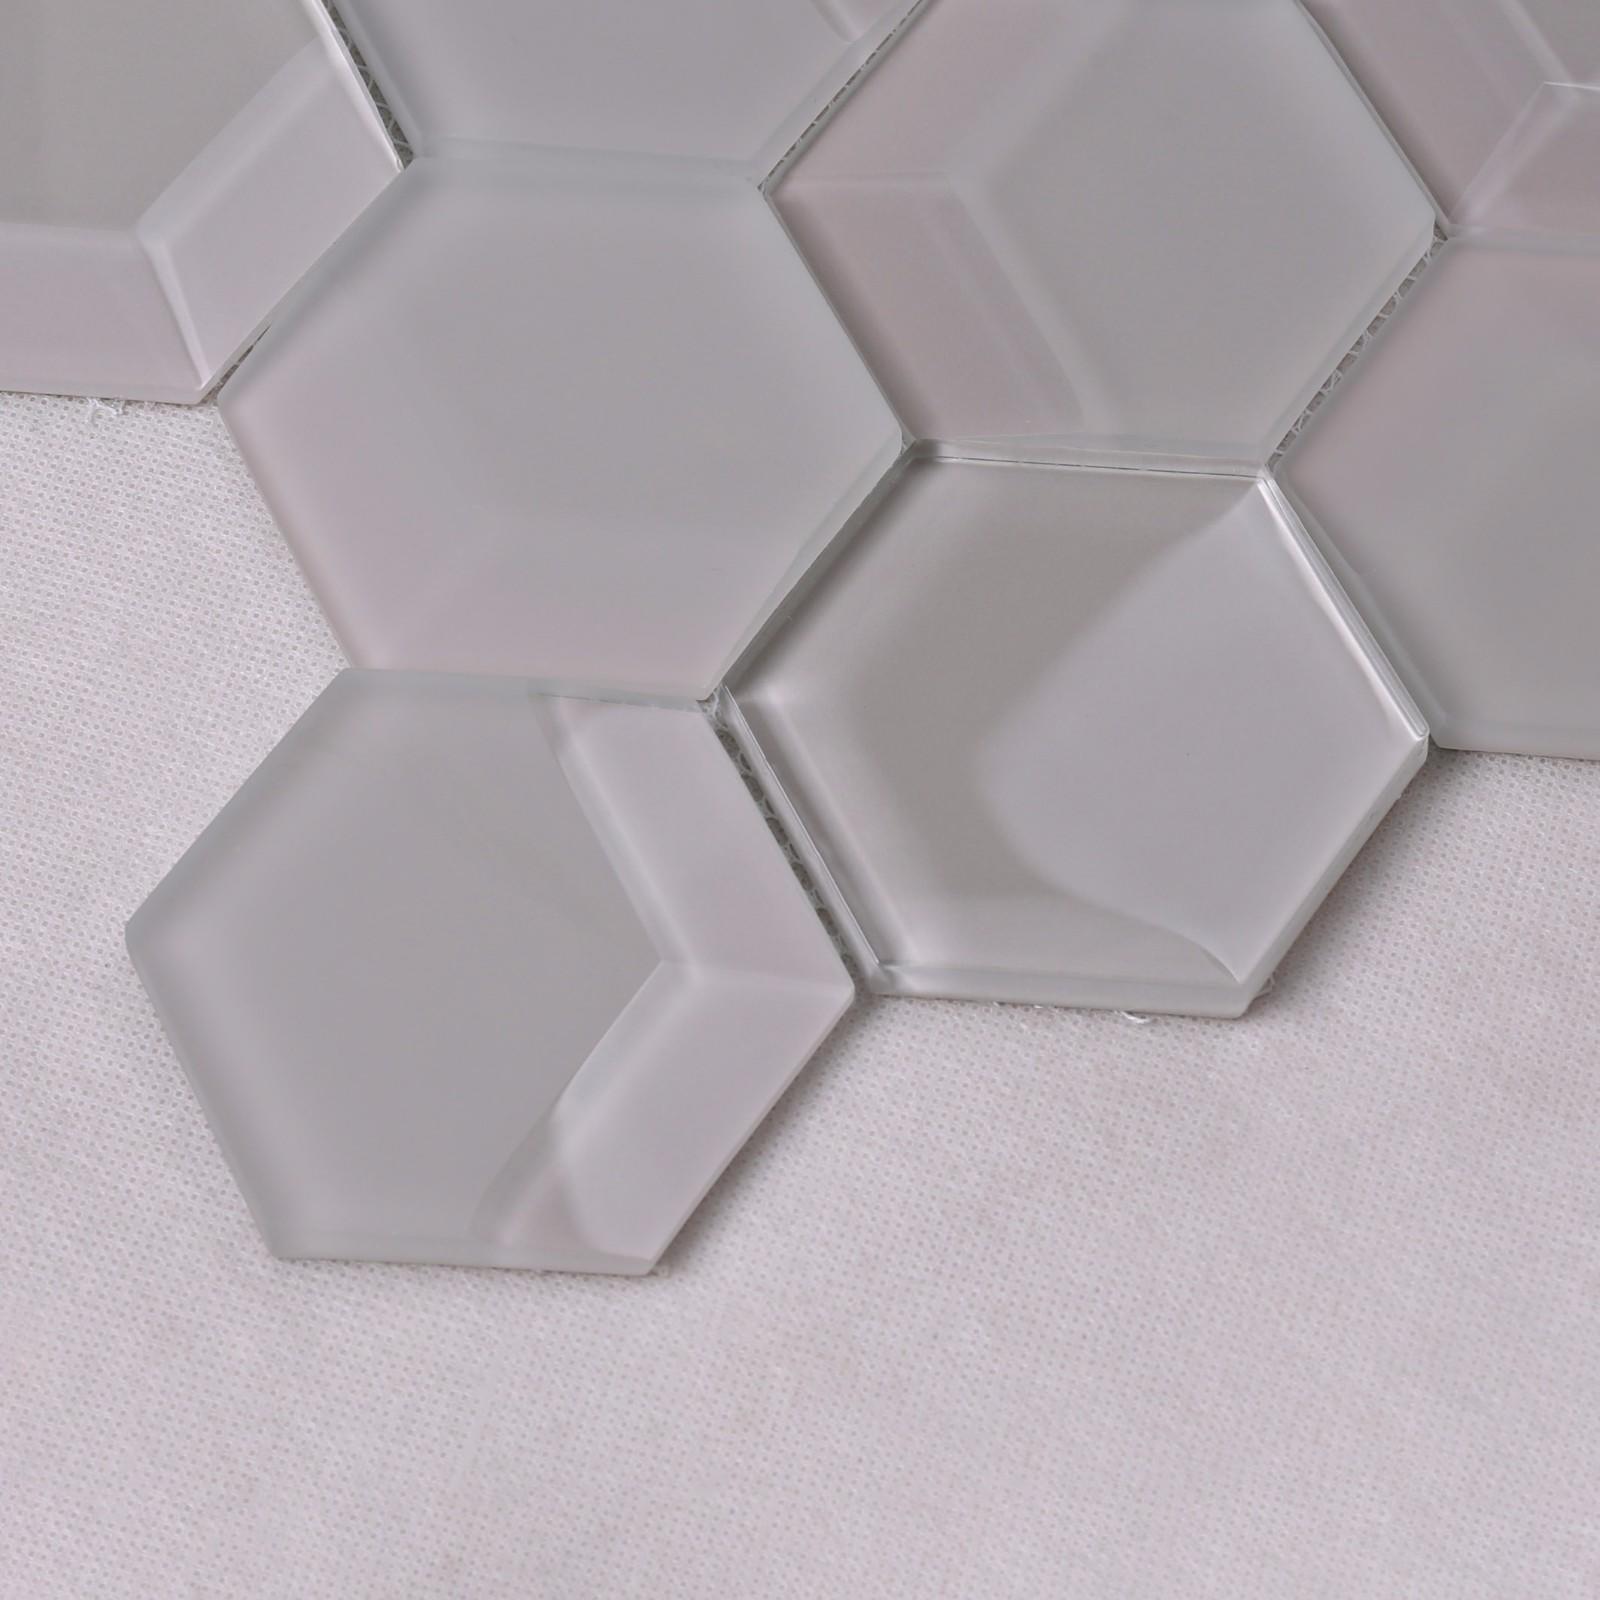 grey 3d mosaic tile splash for hotel Heng Xing